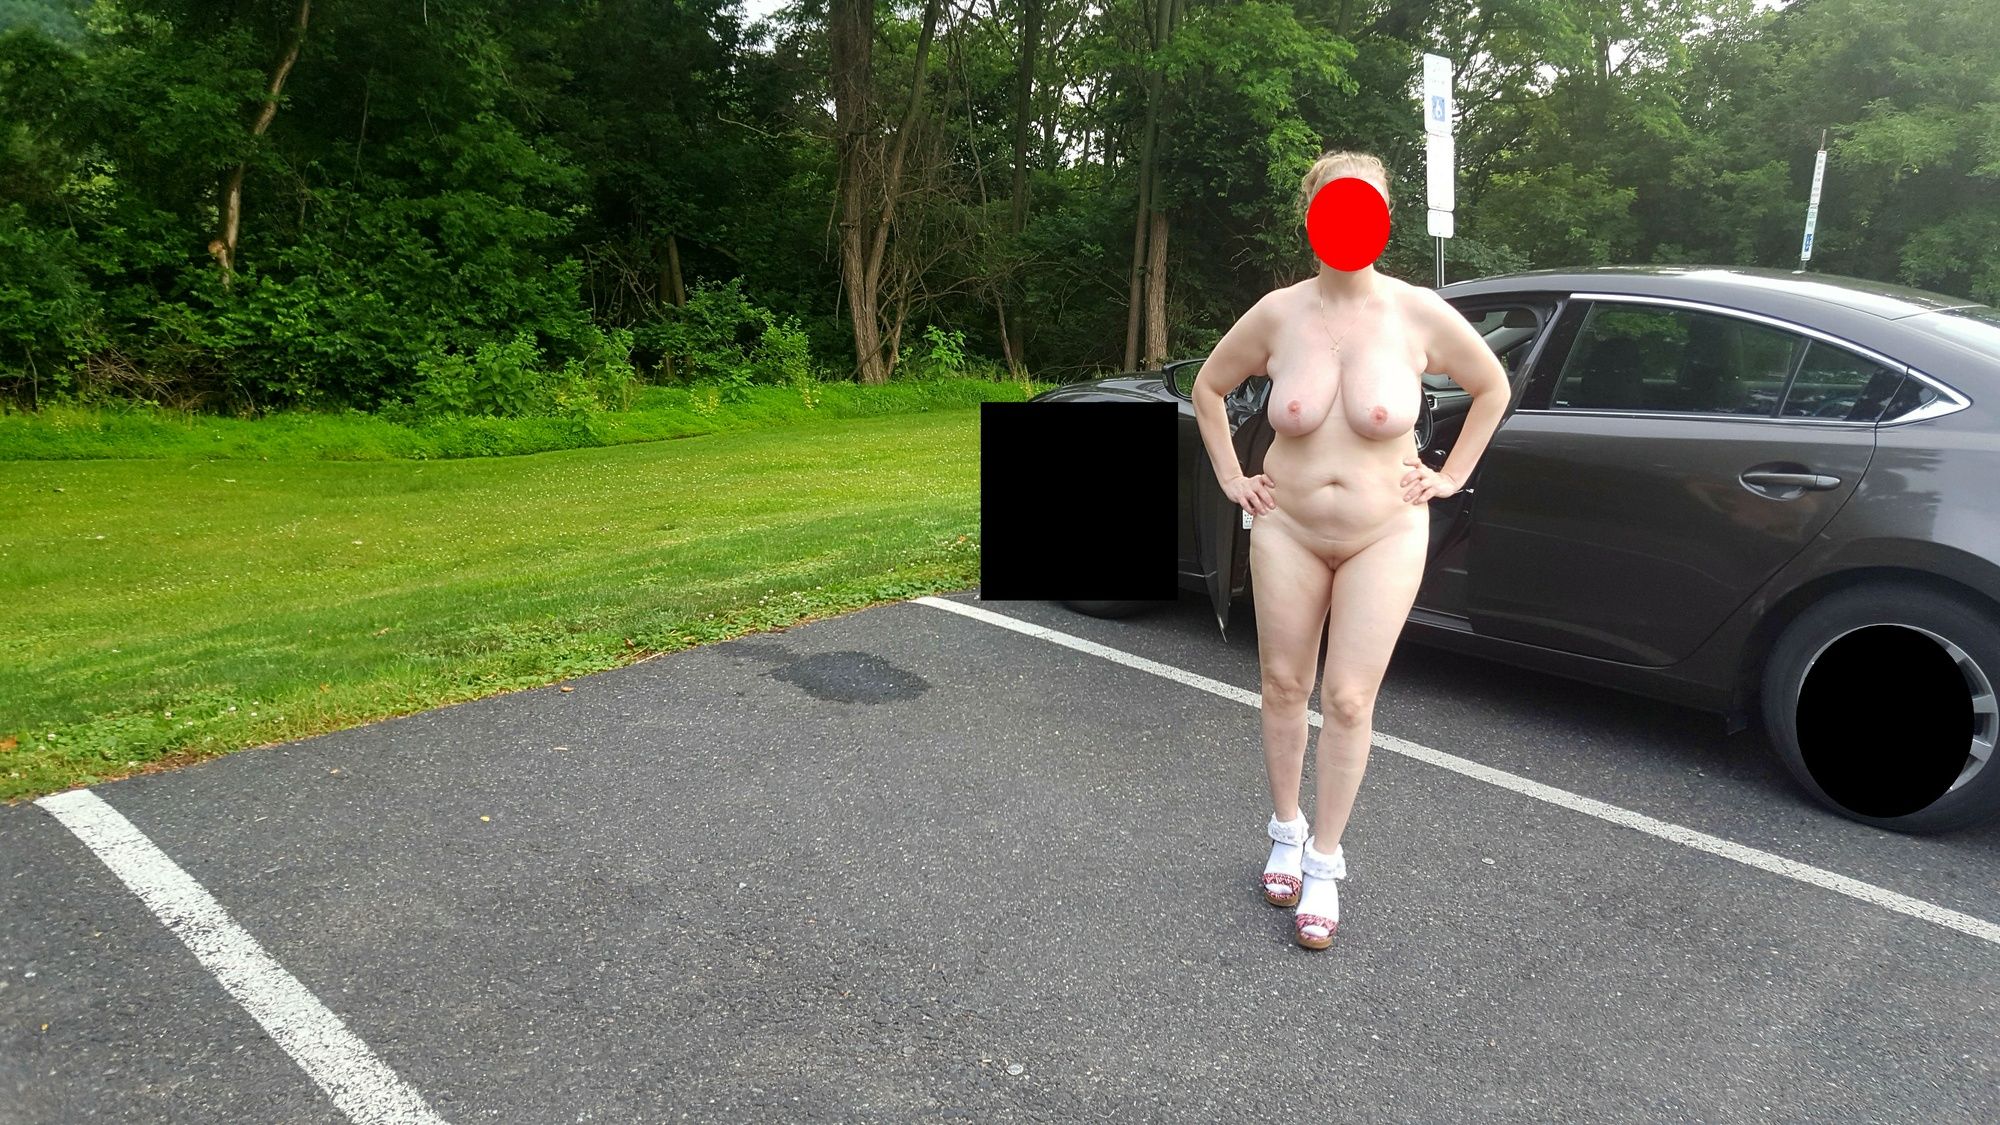 naked parking lot walk #6